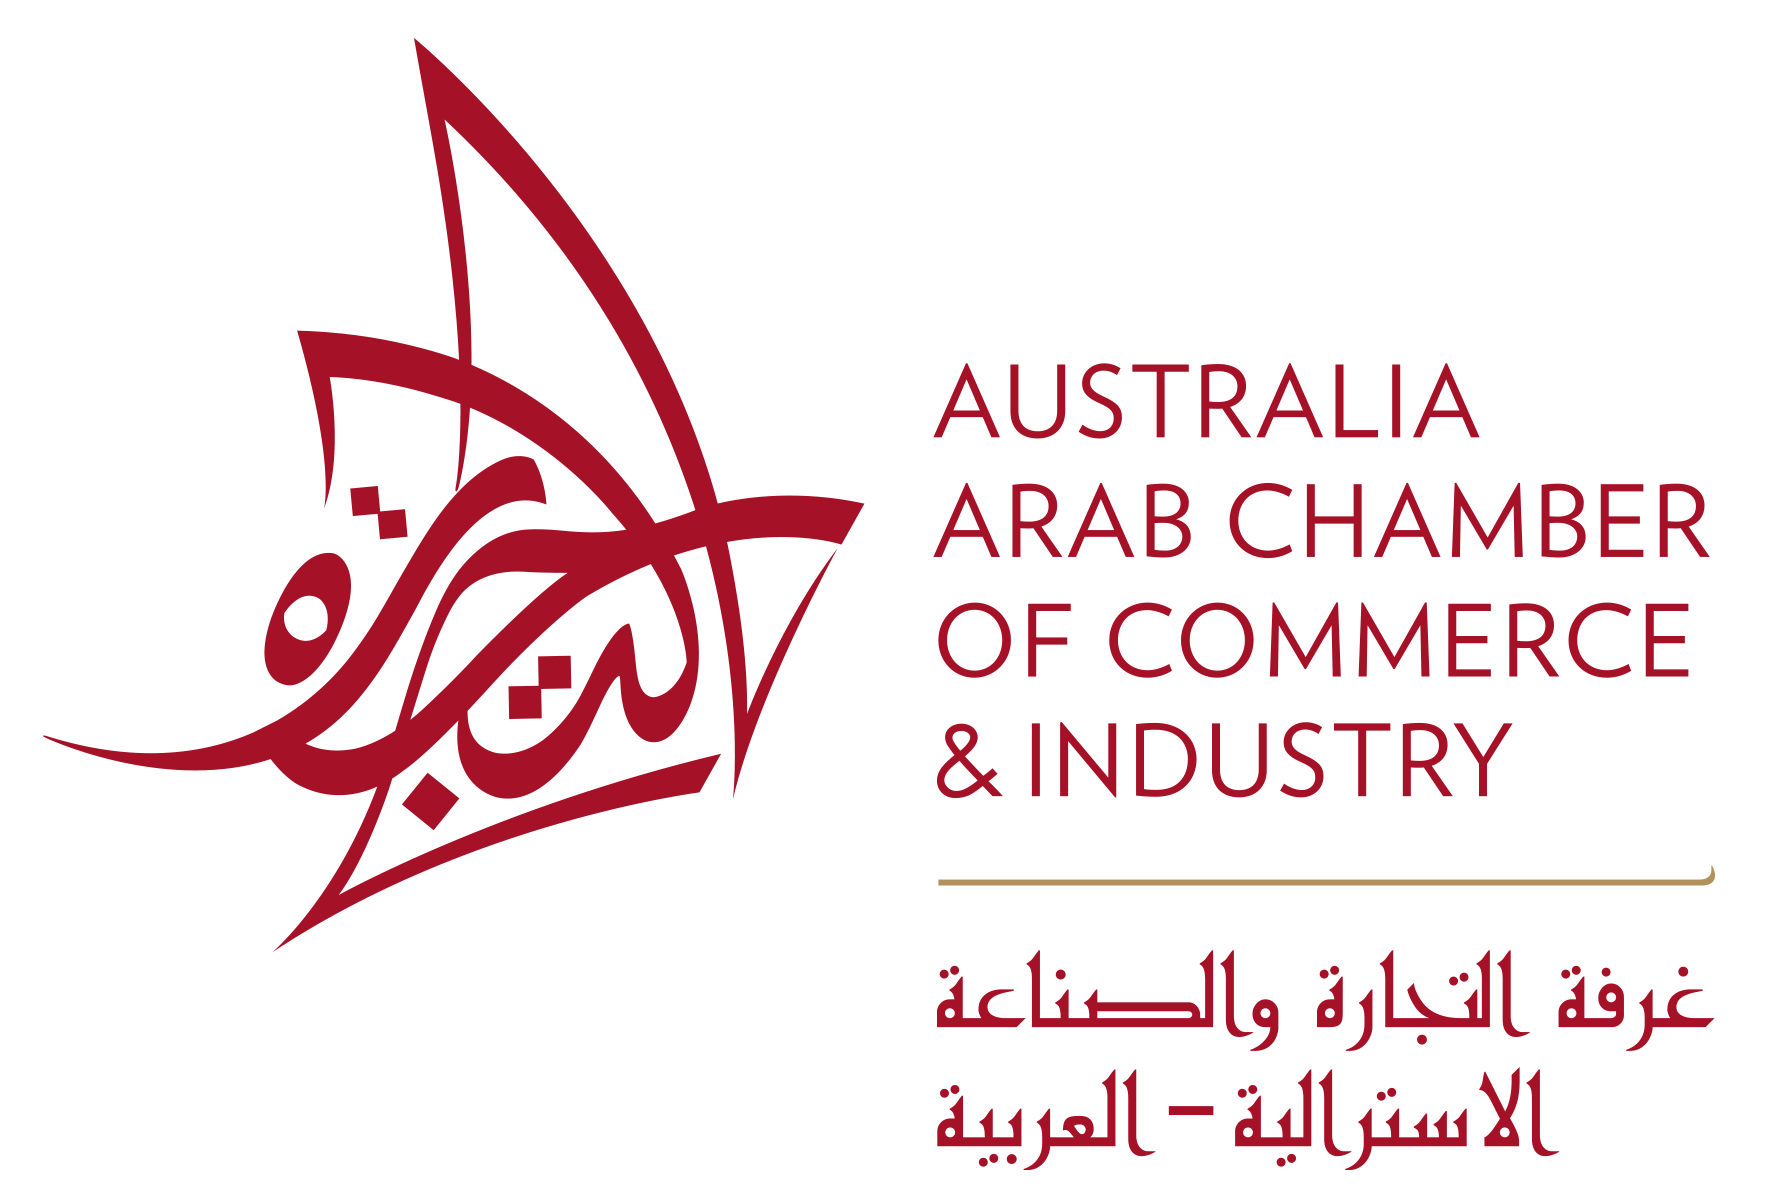 Australia Arab Chamber of Commerce & Industry